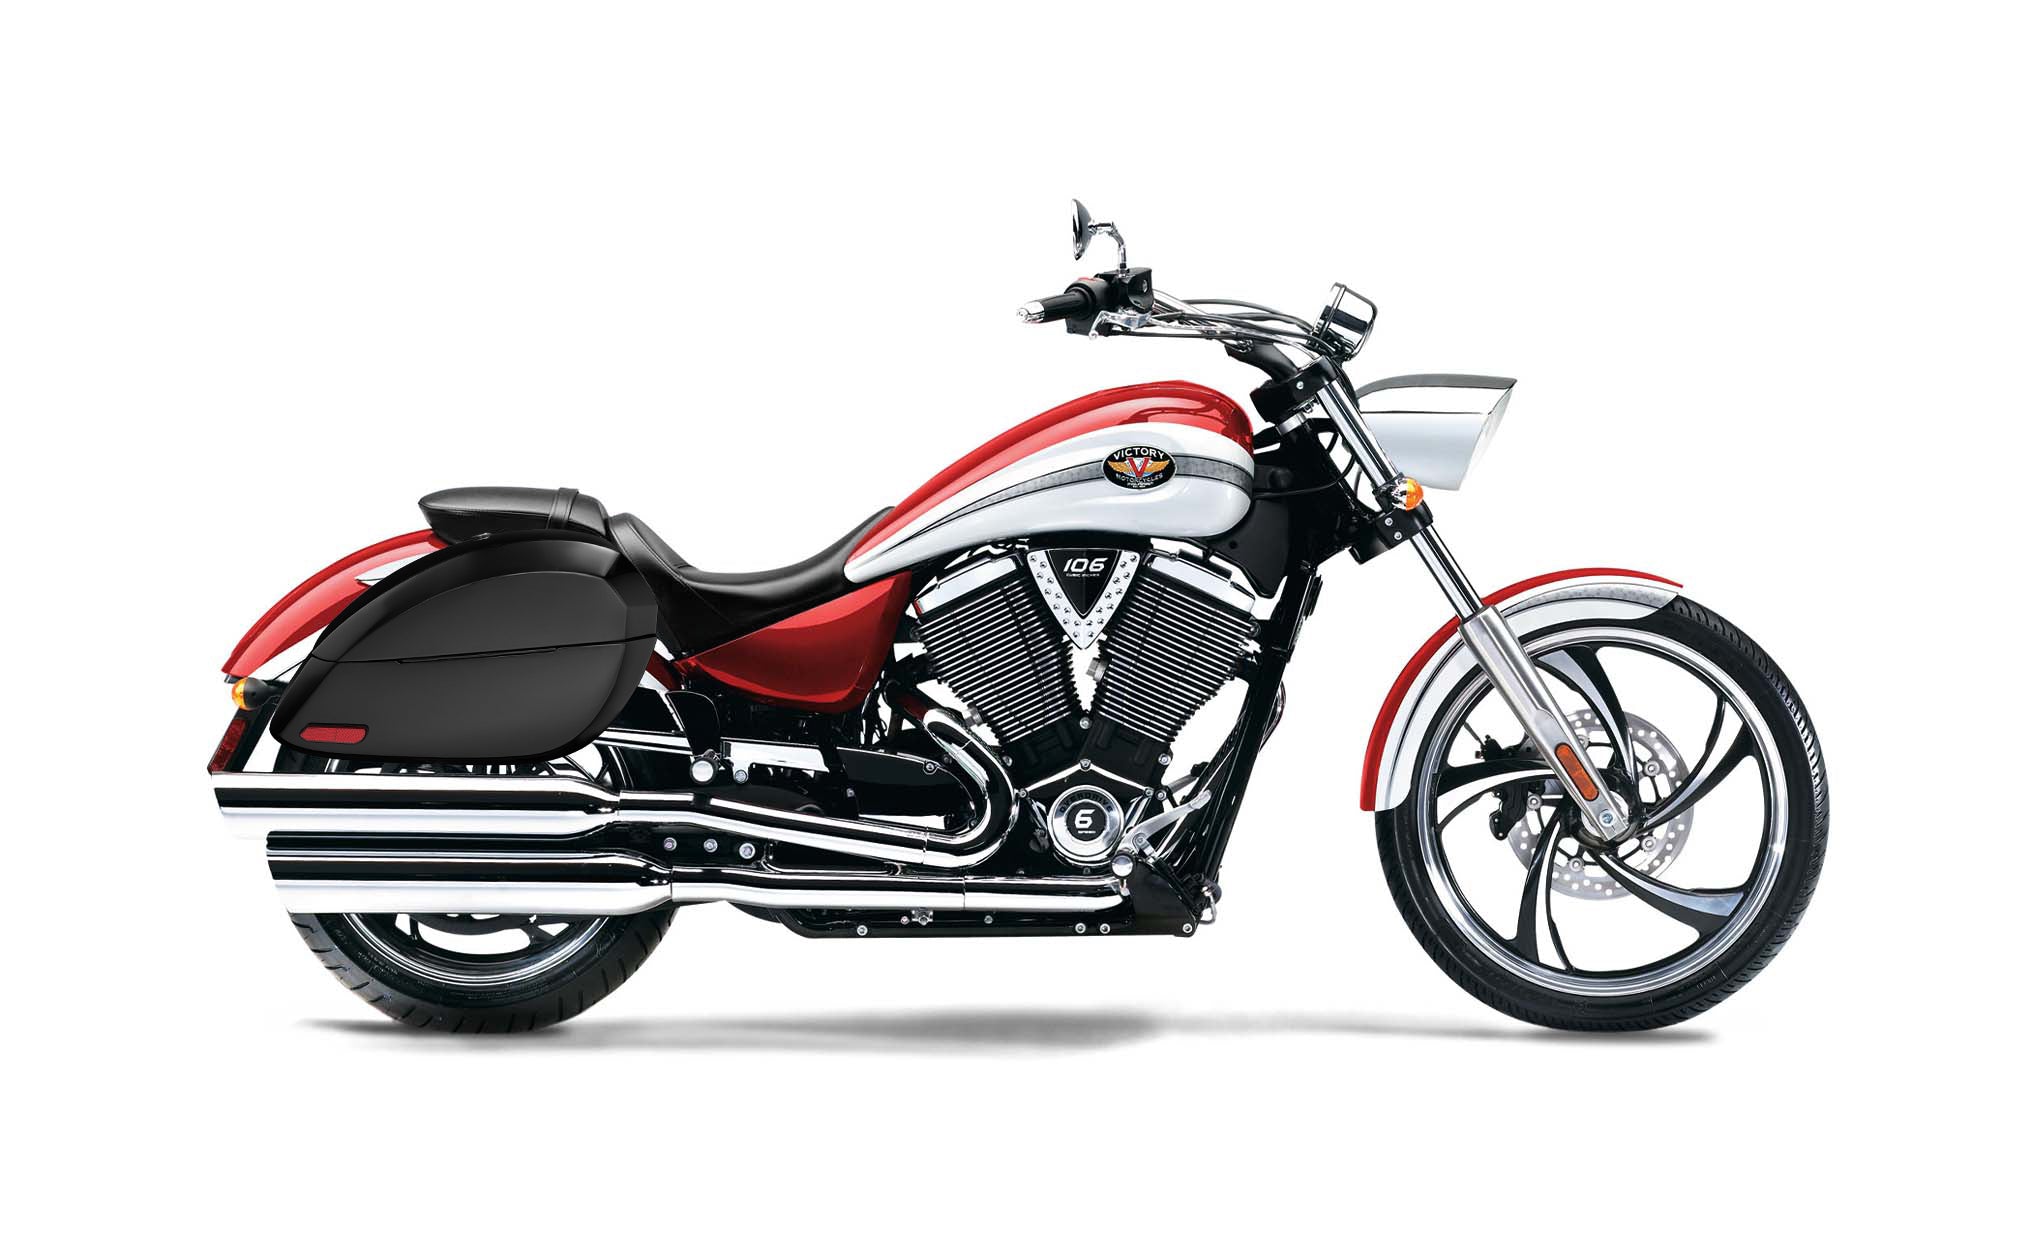 Viking Phantom Large Victory Vegas Painted Motorcycle Hard Saddlebags Engineering Excellence with Bag on Bike @expand